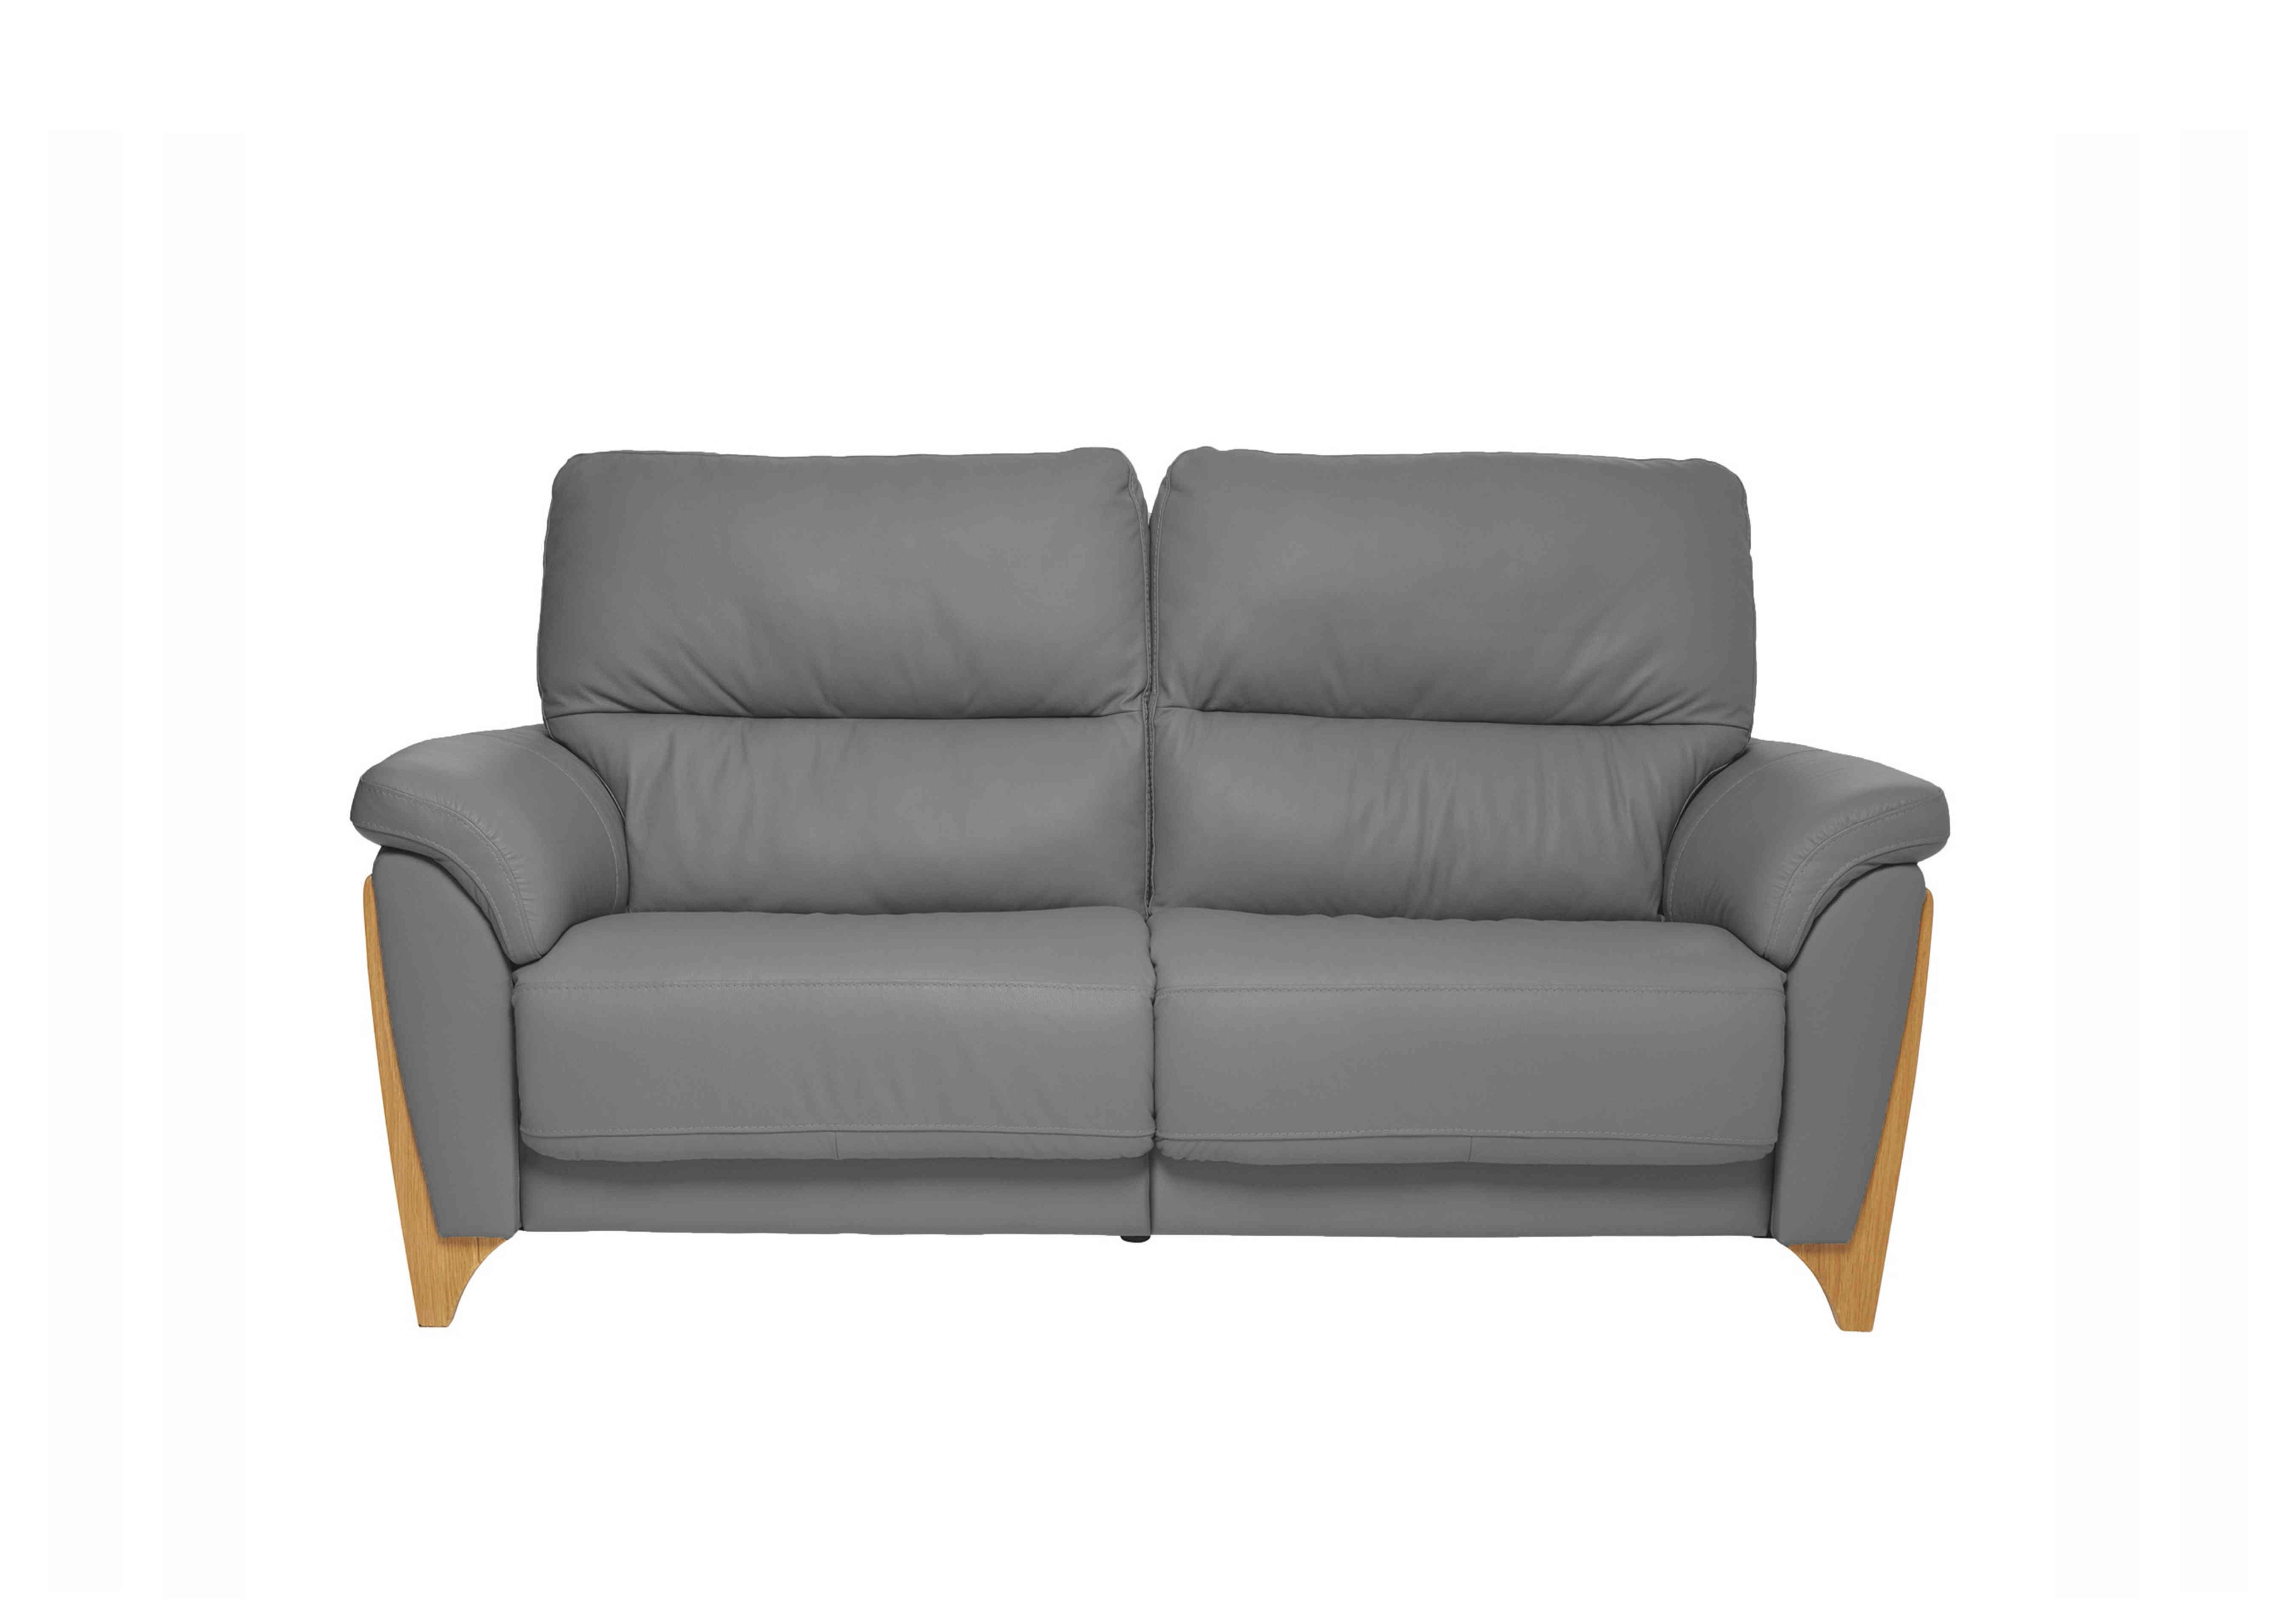 Enna Medium Leather Power Recliner Sofa in L956 on Furniture Village